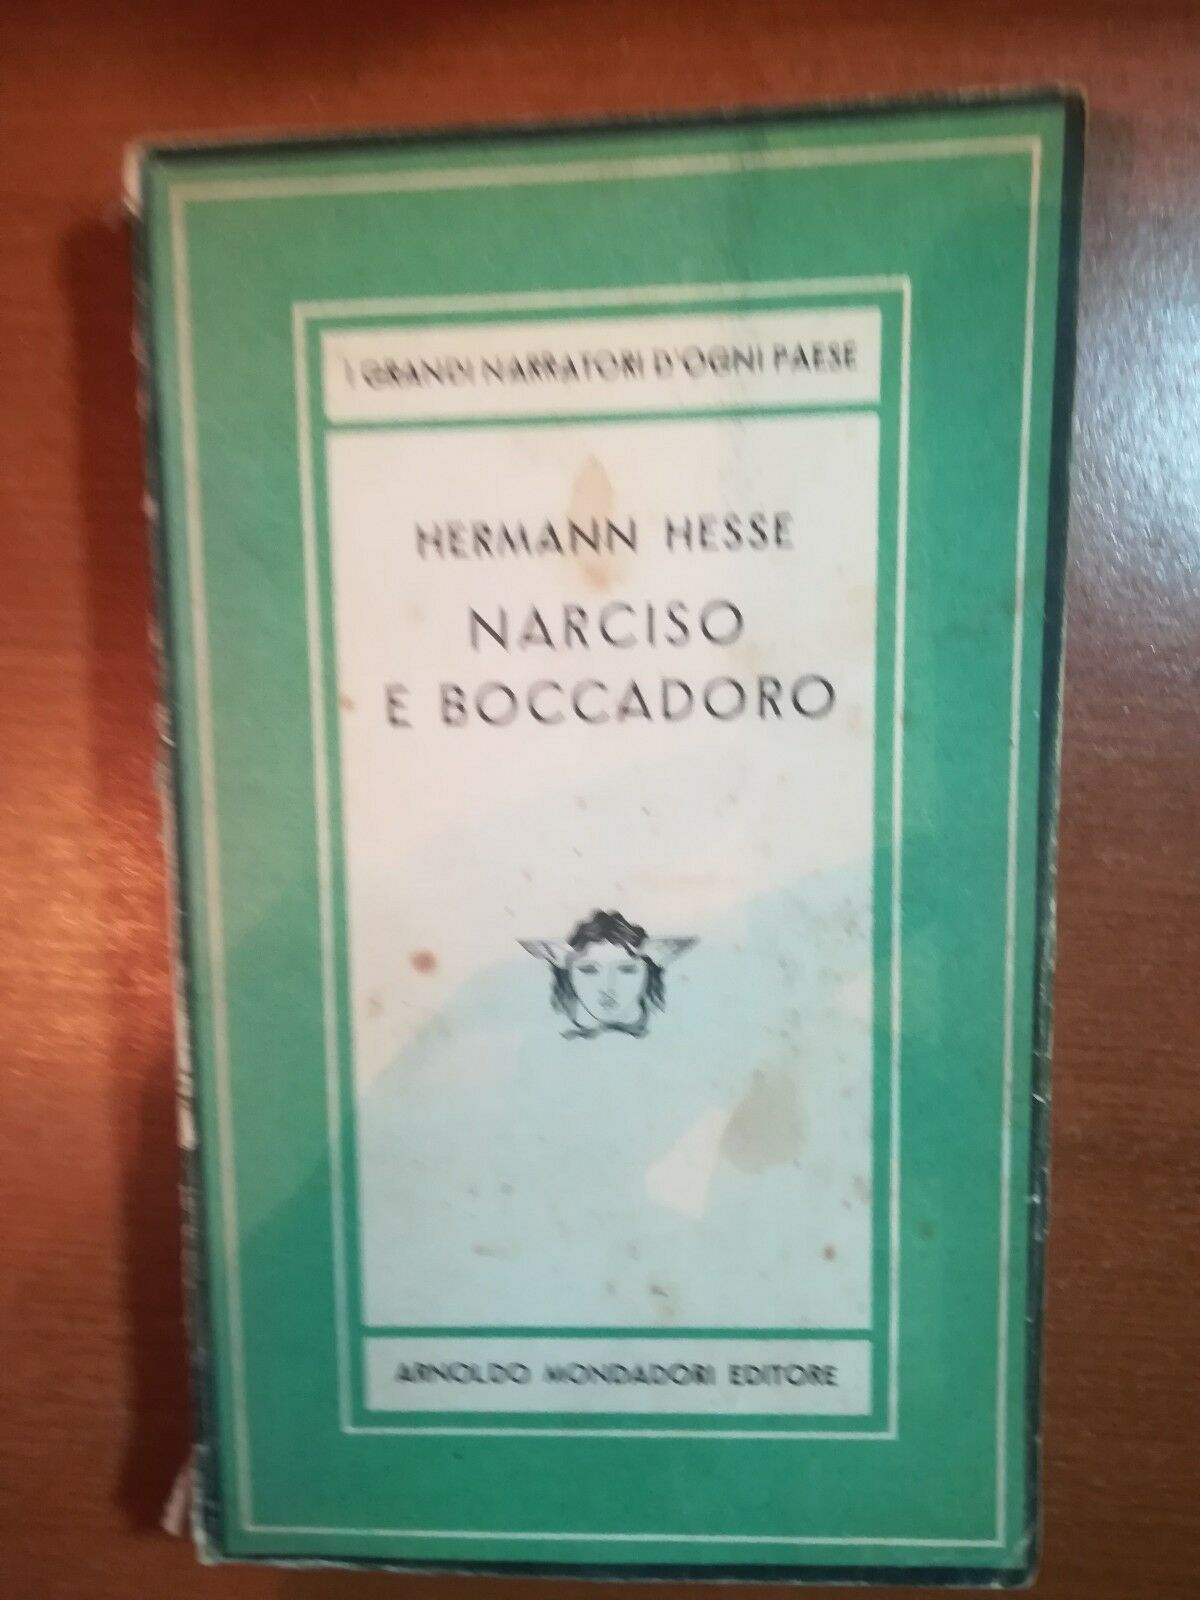 Narciso e boccadoro - Hermann Hesse - Mondadori - 1947 - M